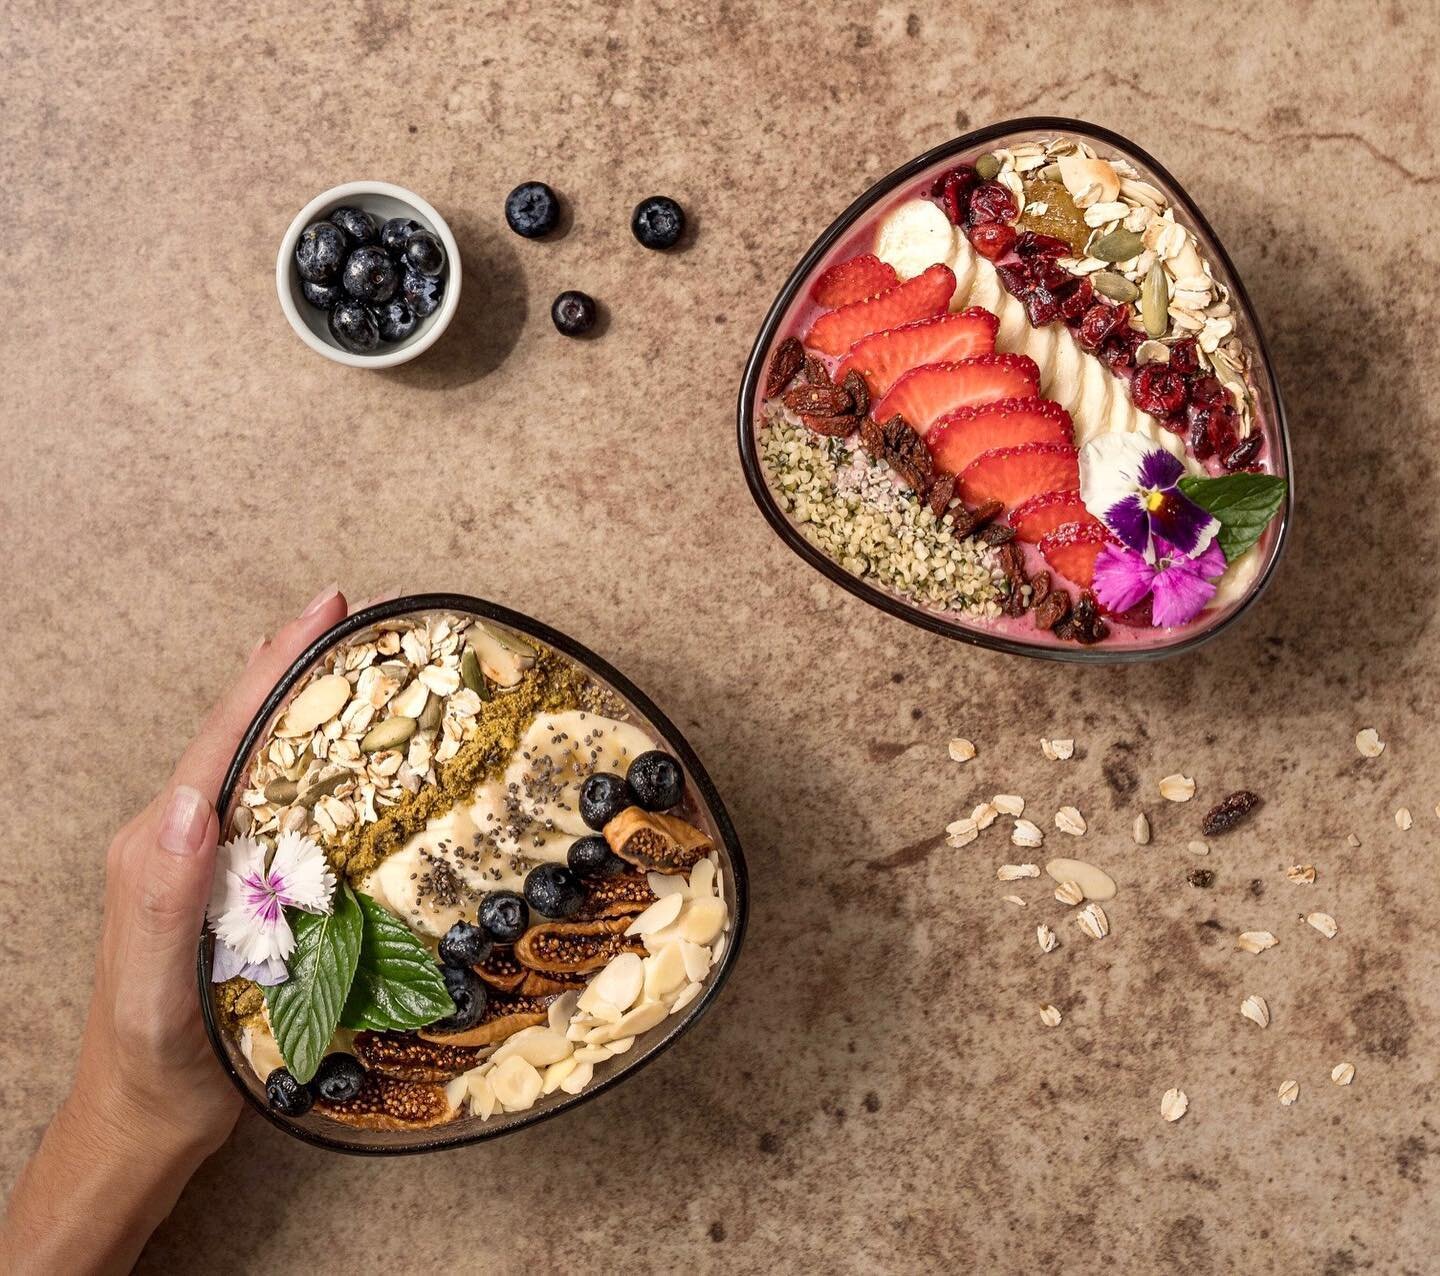 Magic in a bowl 🥣🫐🍓

𝑊𝑒𝑙𝑐𝑜𝑚𝑒 𝑡𝑜 𝑡ℎ𝑒 𝑓𝑒𝑒𝑙-𝑔𝑜𝑜𝑑 𝑙𝑖𝑓𝑒

_______________________

#Arcana #veganrestaurant  #coffeebar #playadelcarmen #healthyfood #veganfood